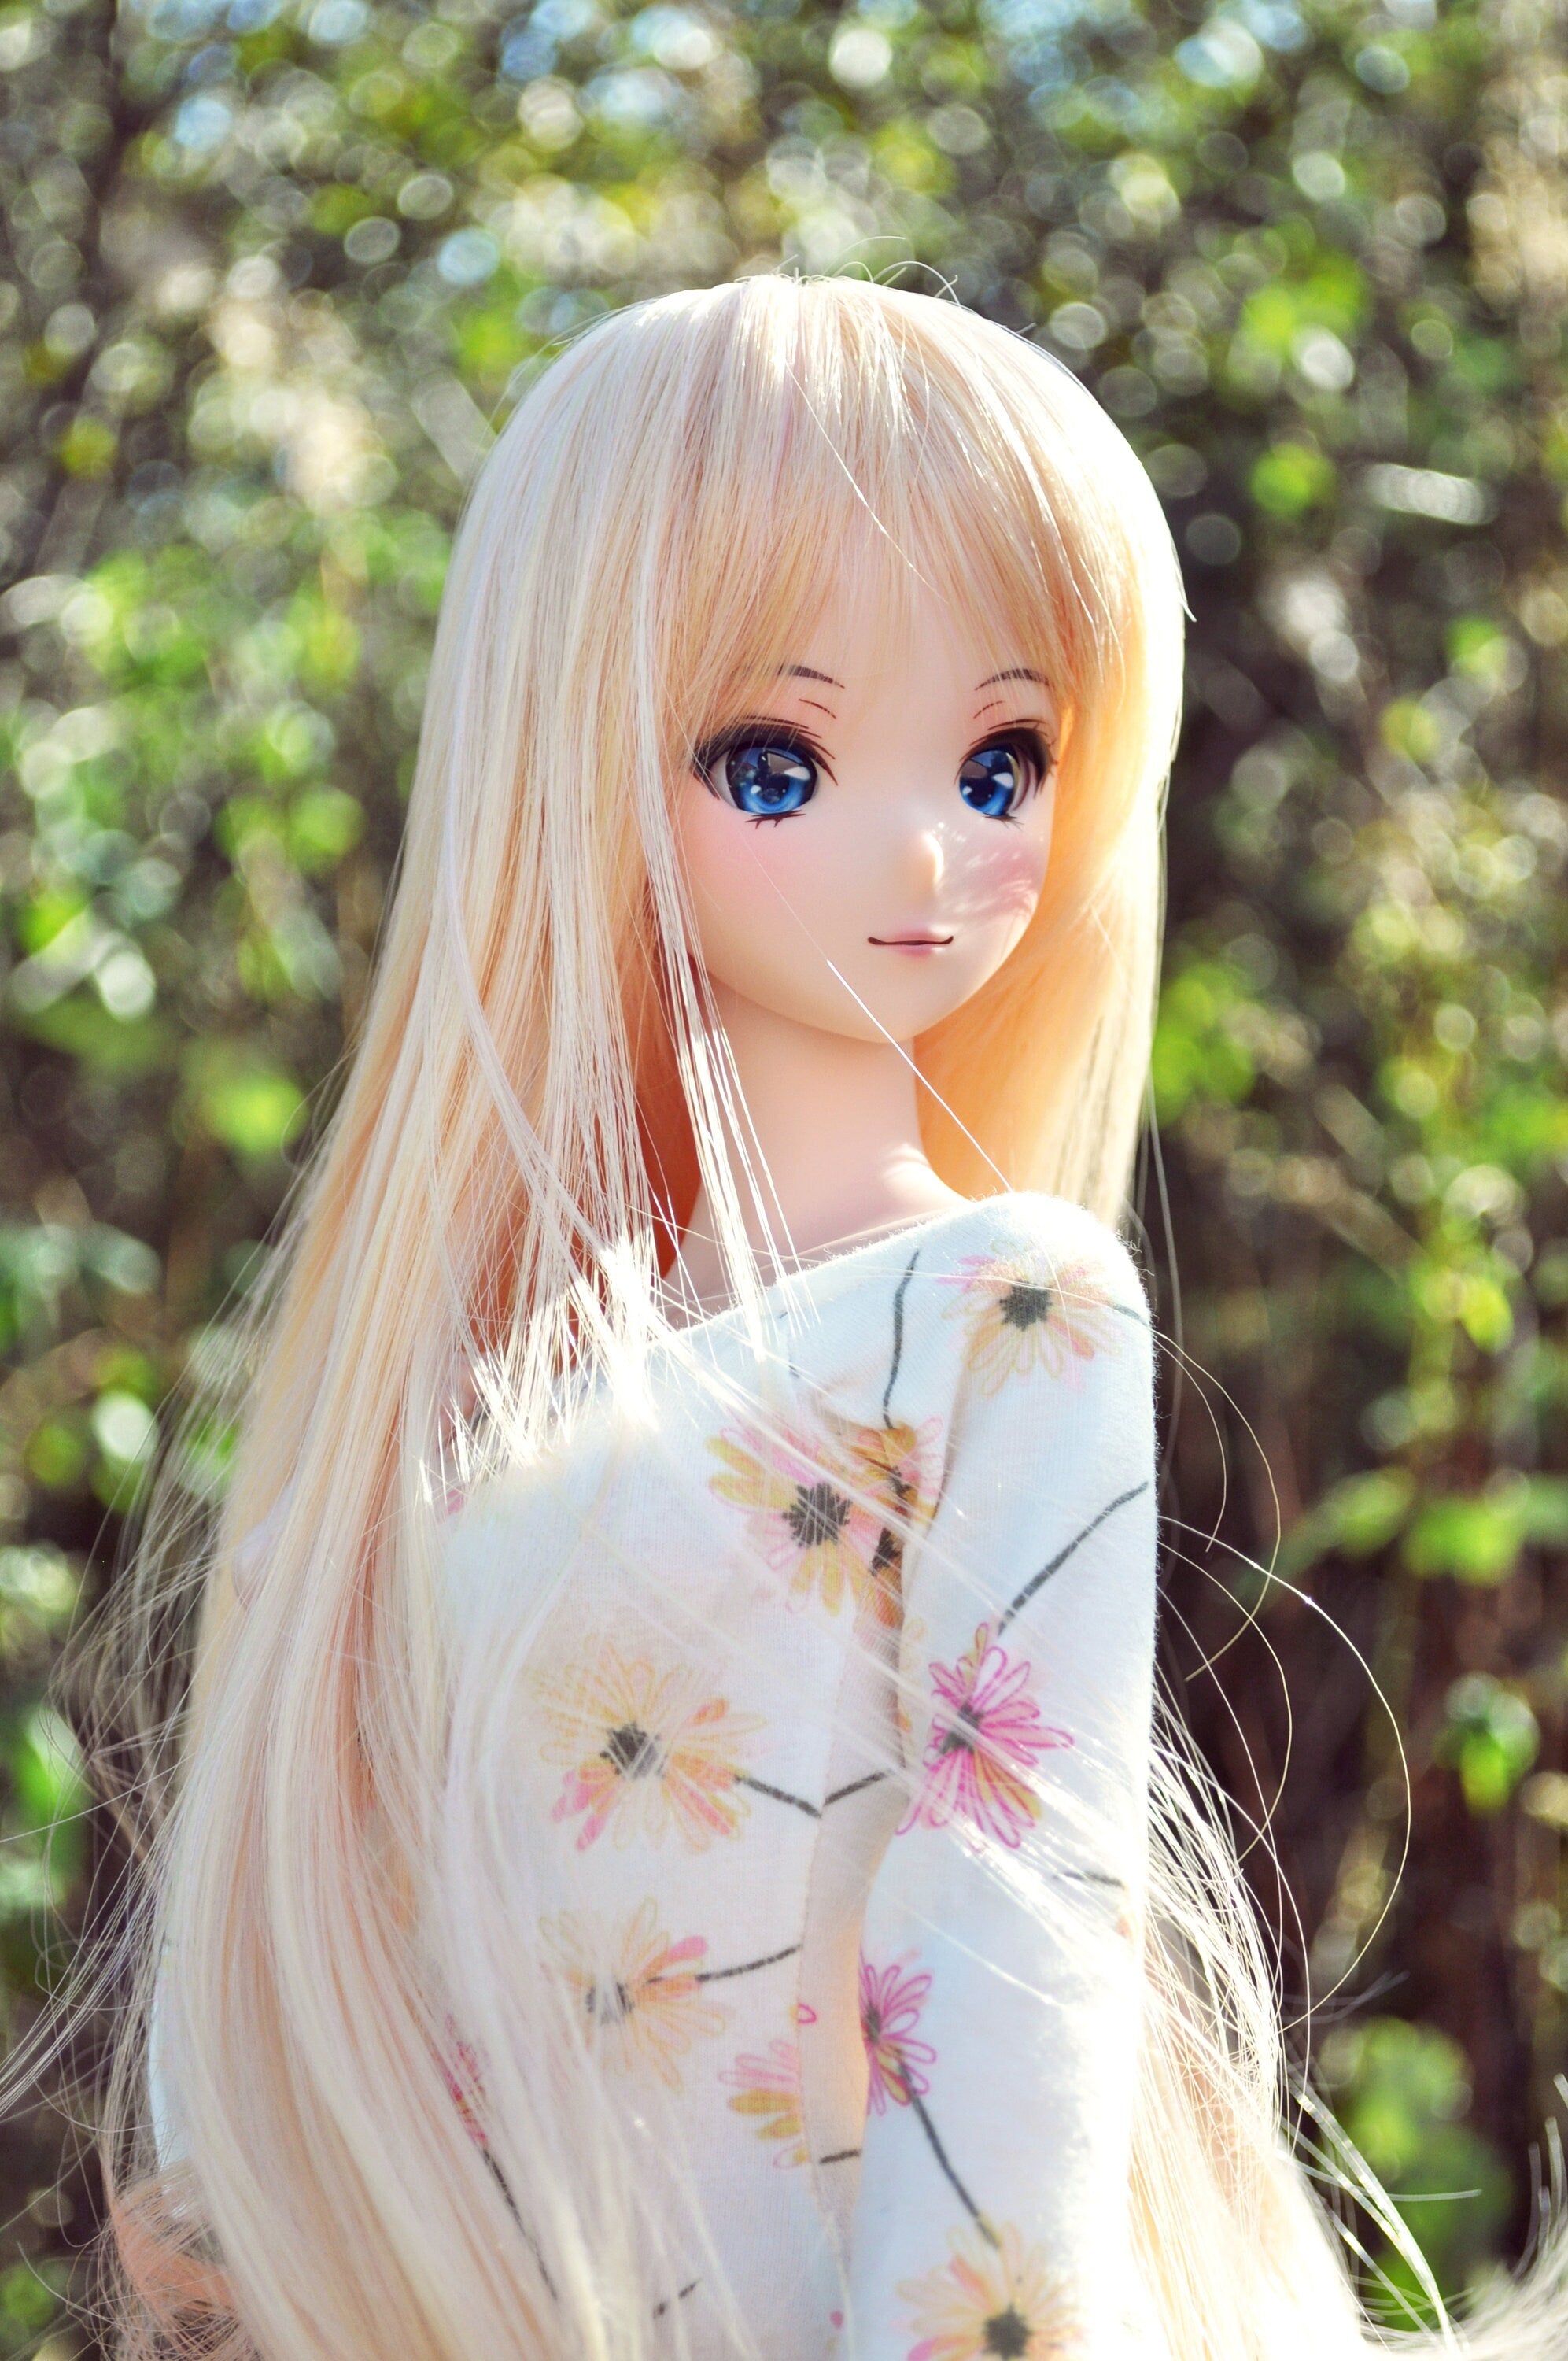 Custom doll WIG for Smart Dolls- Heat Safe - Tangle Resistant- 8.5" head size of Bjd, Sd, Dollfie Dream dolls  "TAN CAPS" Blonde Limited